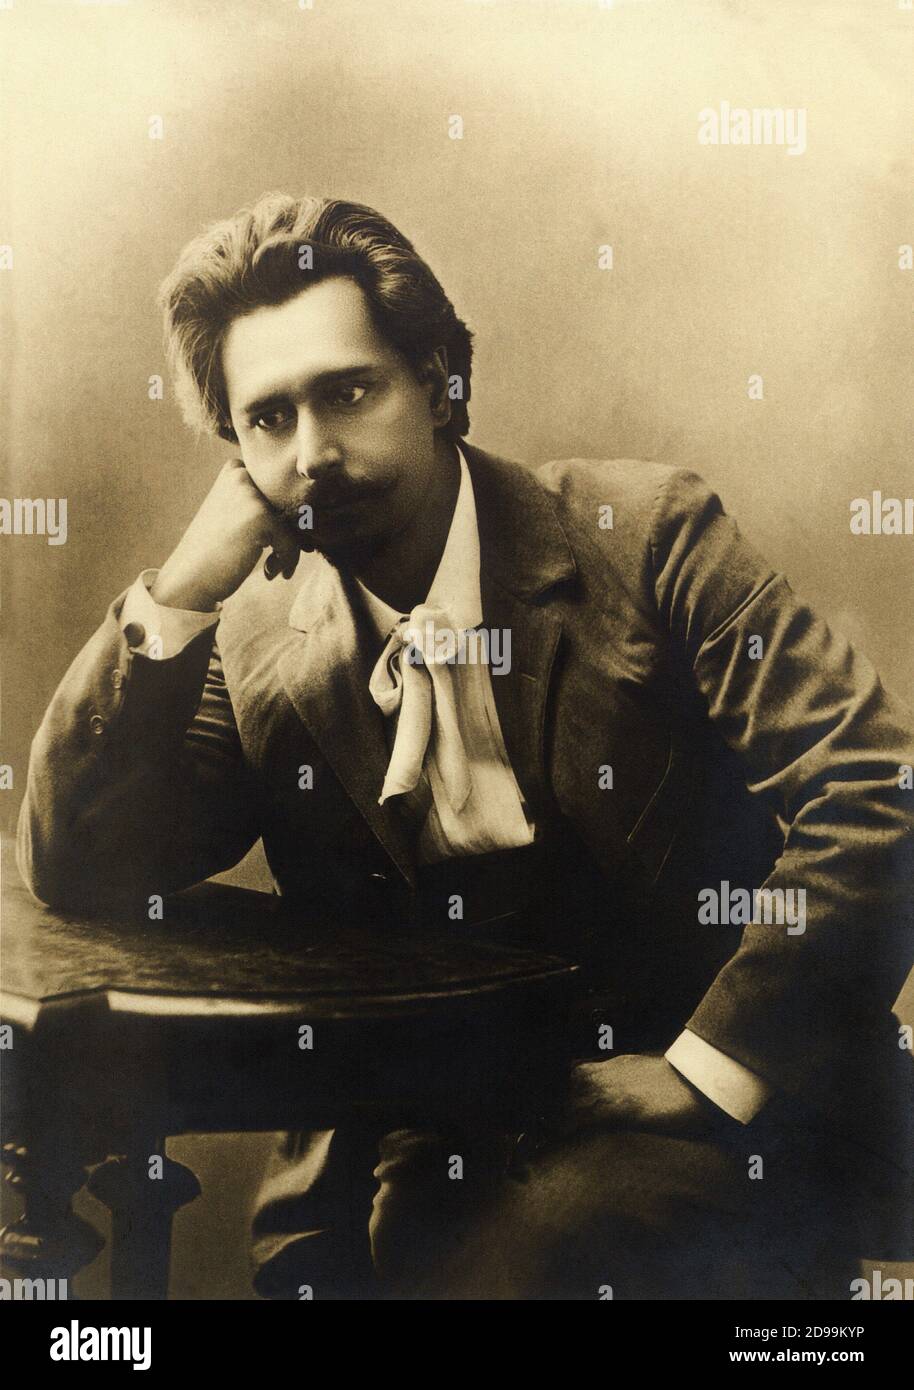 The russian writer and playwright   LEONID Nikolaevic  ANDREEV ( Orel 1871 - Mustamaggi 1919 ) - ANDREYEV - ANDREIYEV - portrait - ritratto - baffi - moustache - barba - beard - polsino - cuff - wristband - cravatta - tie ----  Archivio GBB Stock Photo